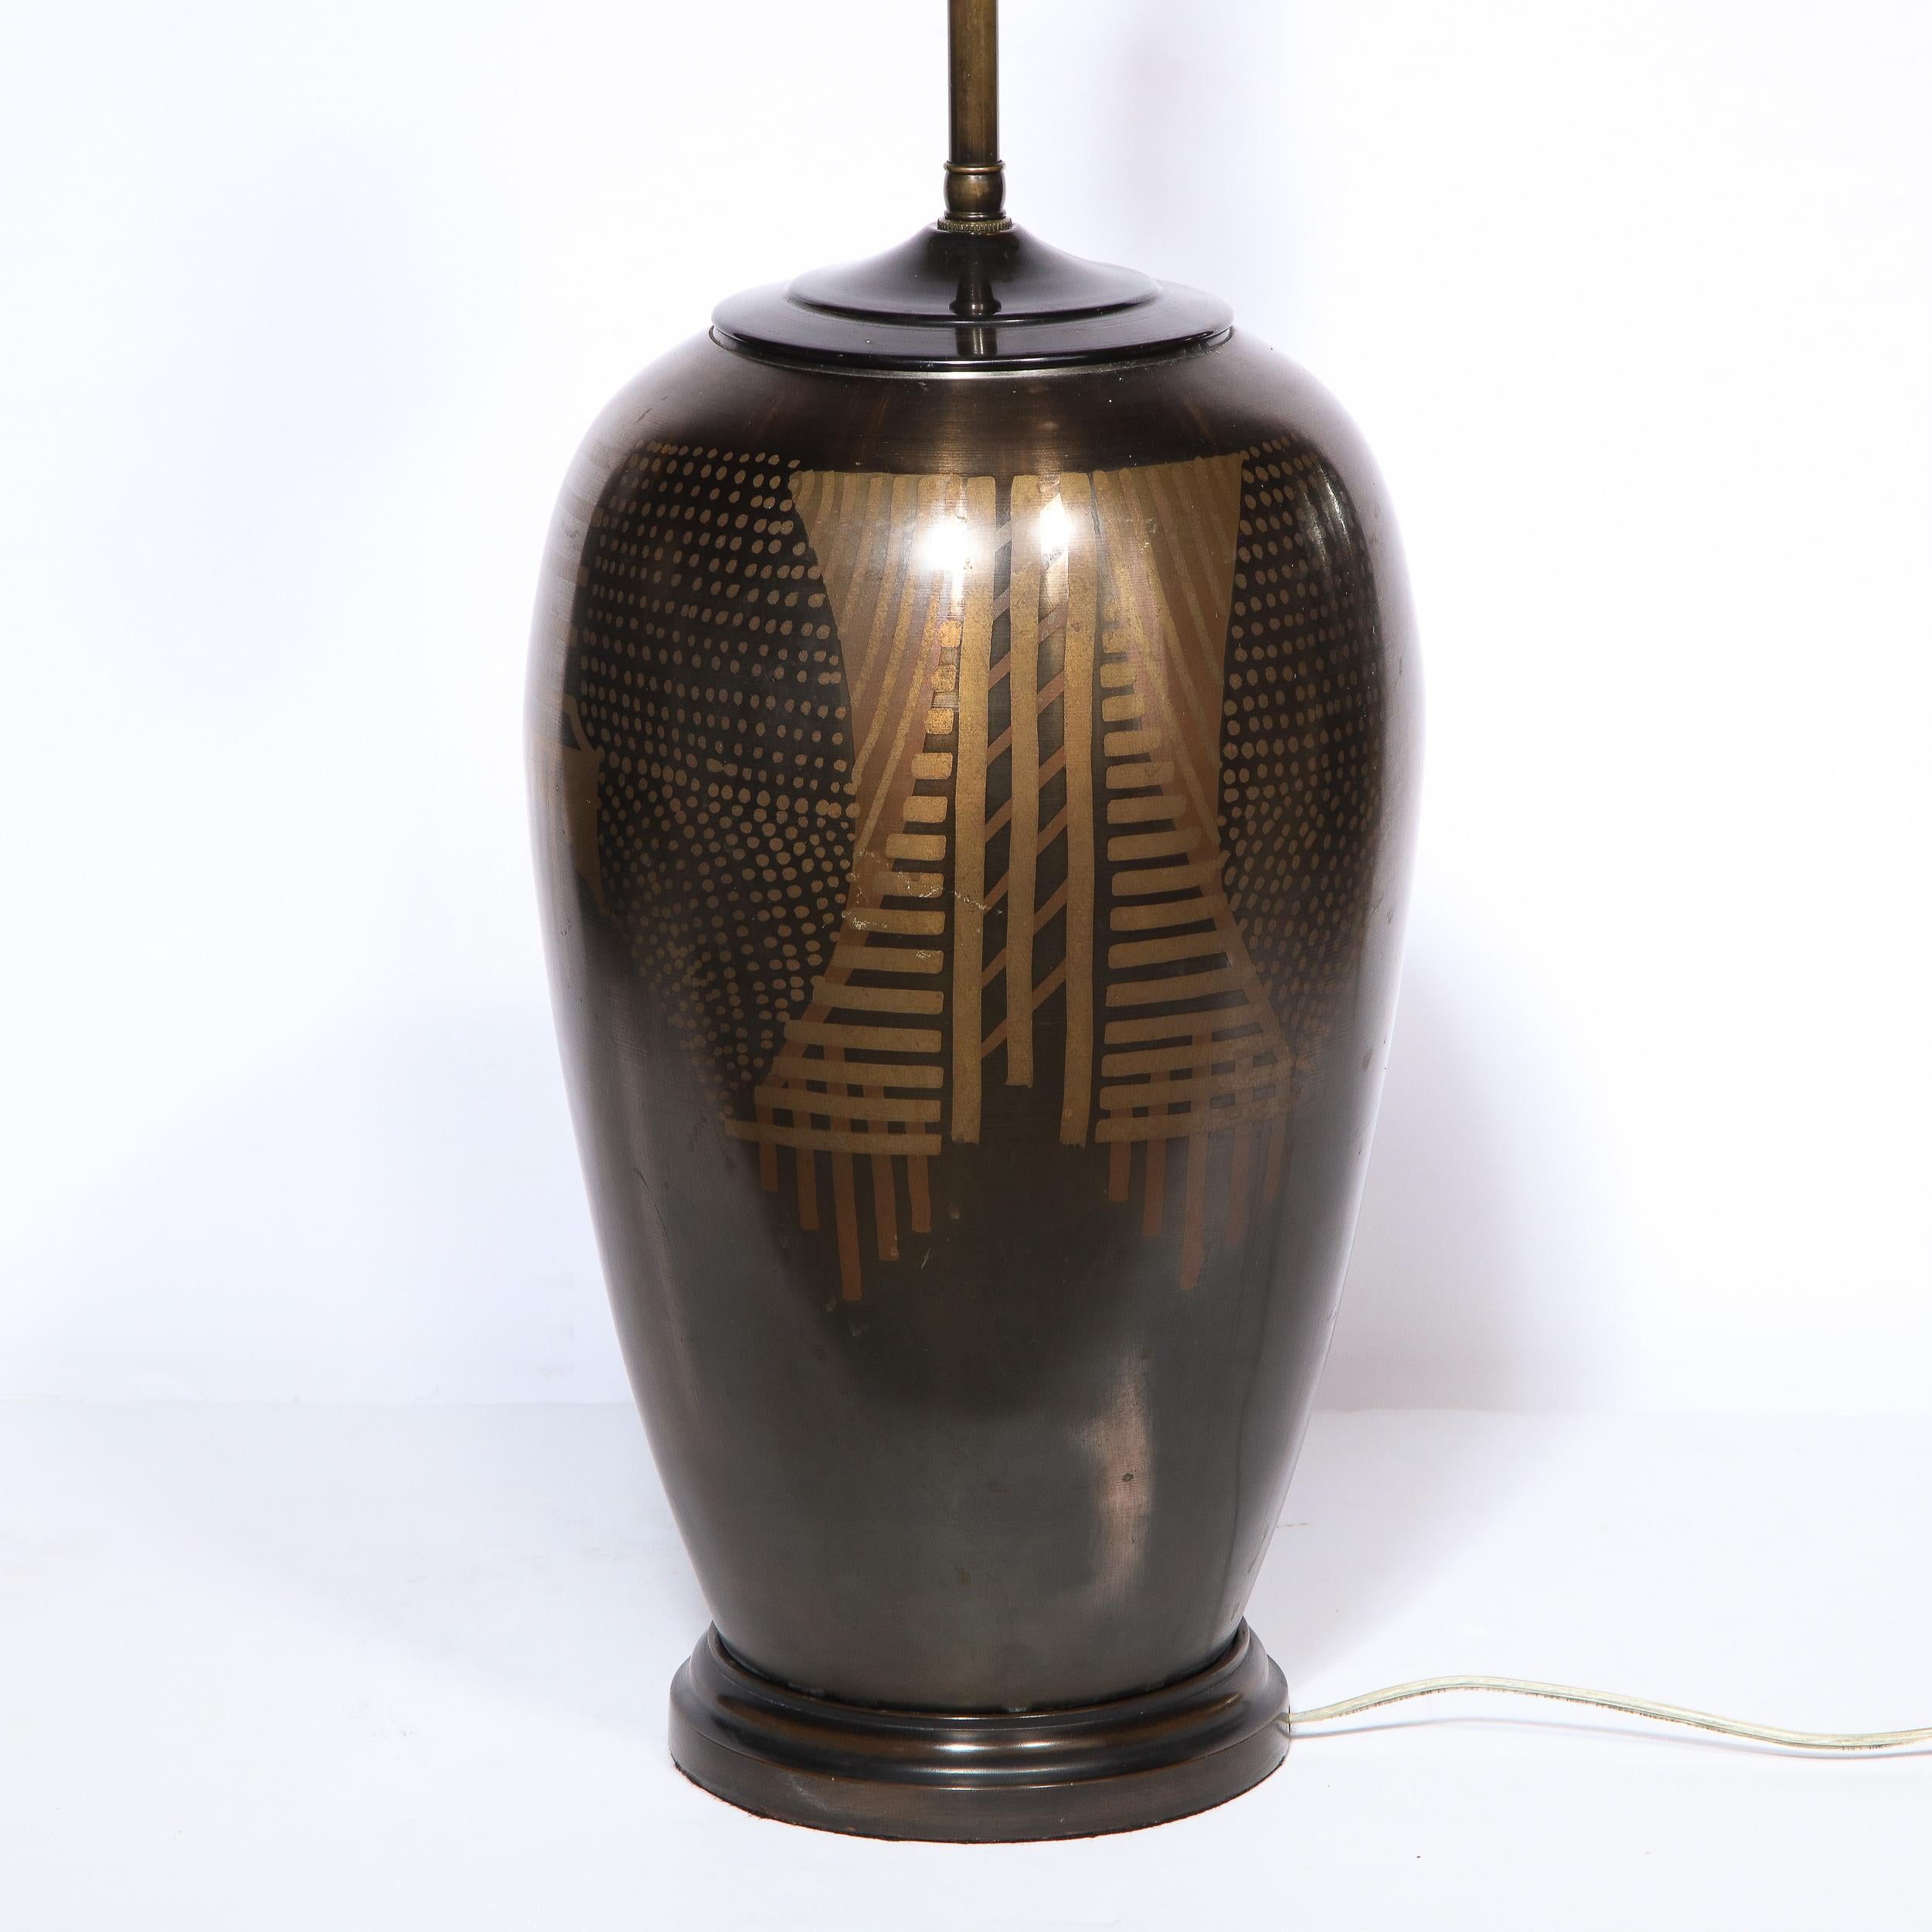 Art Deco Revival Bronze Table Lamp with Handpainted Gold Cubist Motifs 1